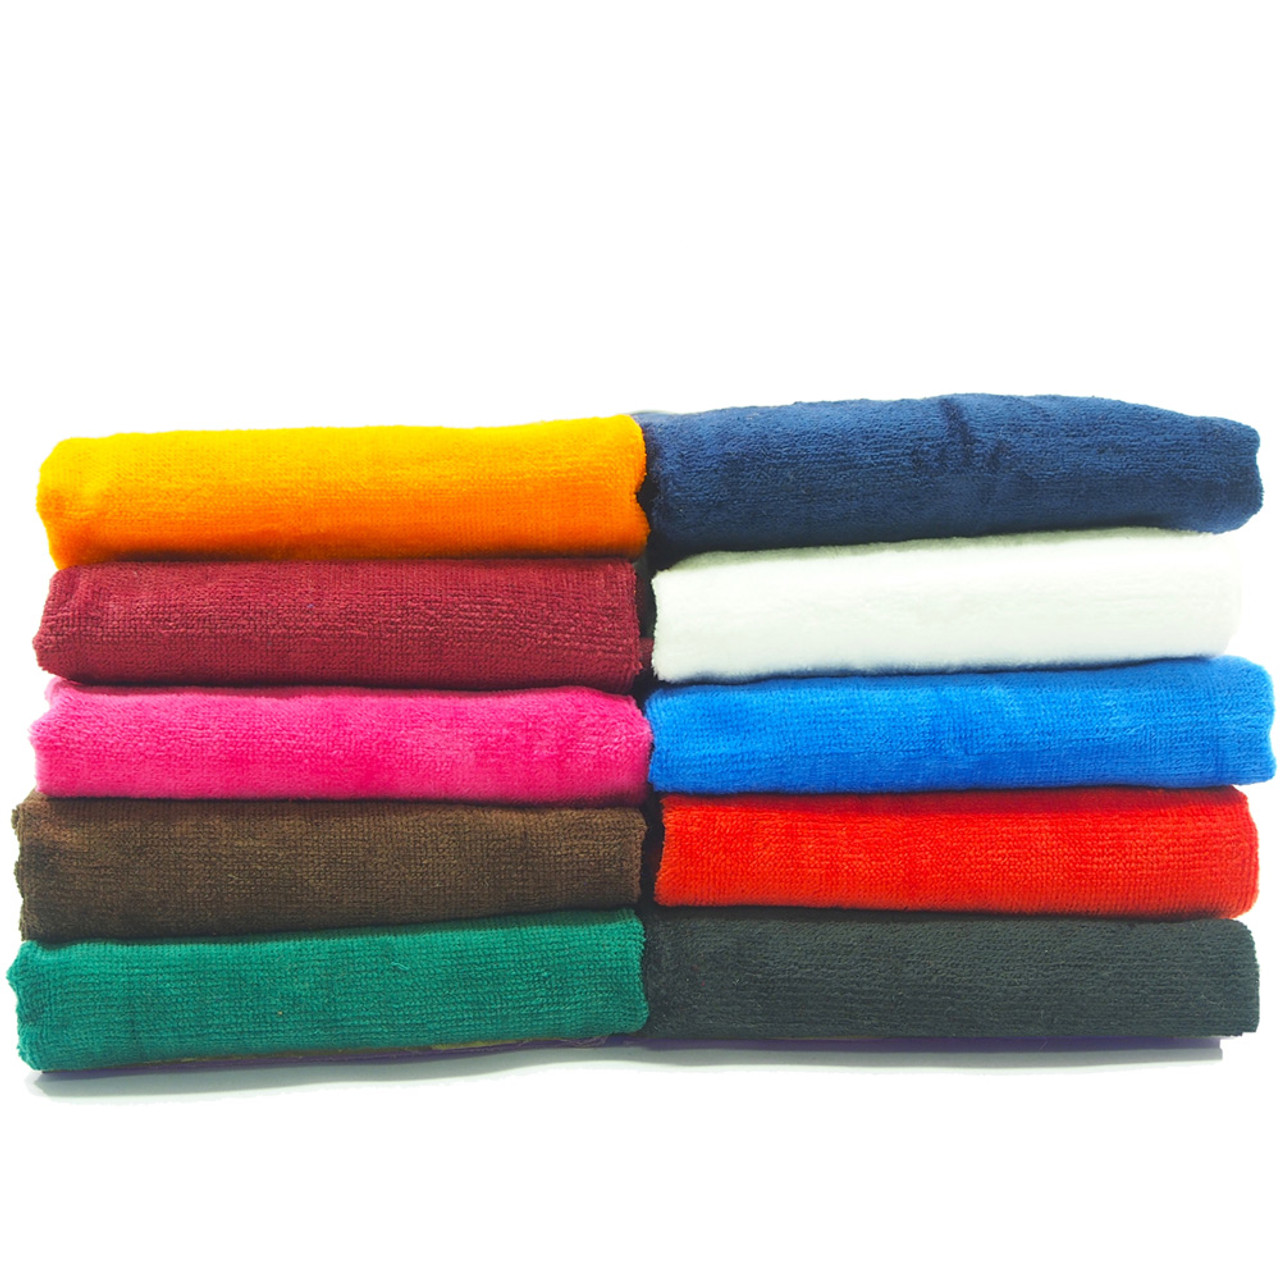 Wholesale Towels > 16x26 - LIME GREEN Wholesale Terry Velour Hand Towels  100% Cotton